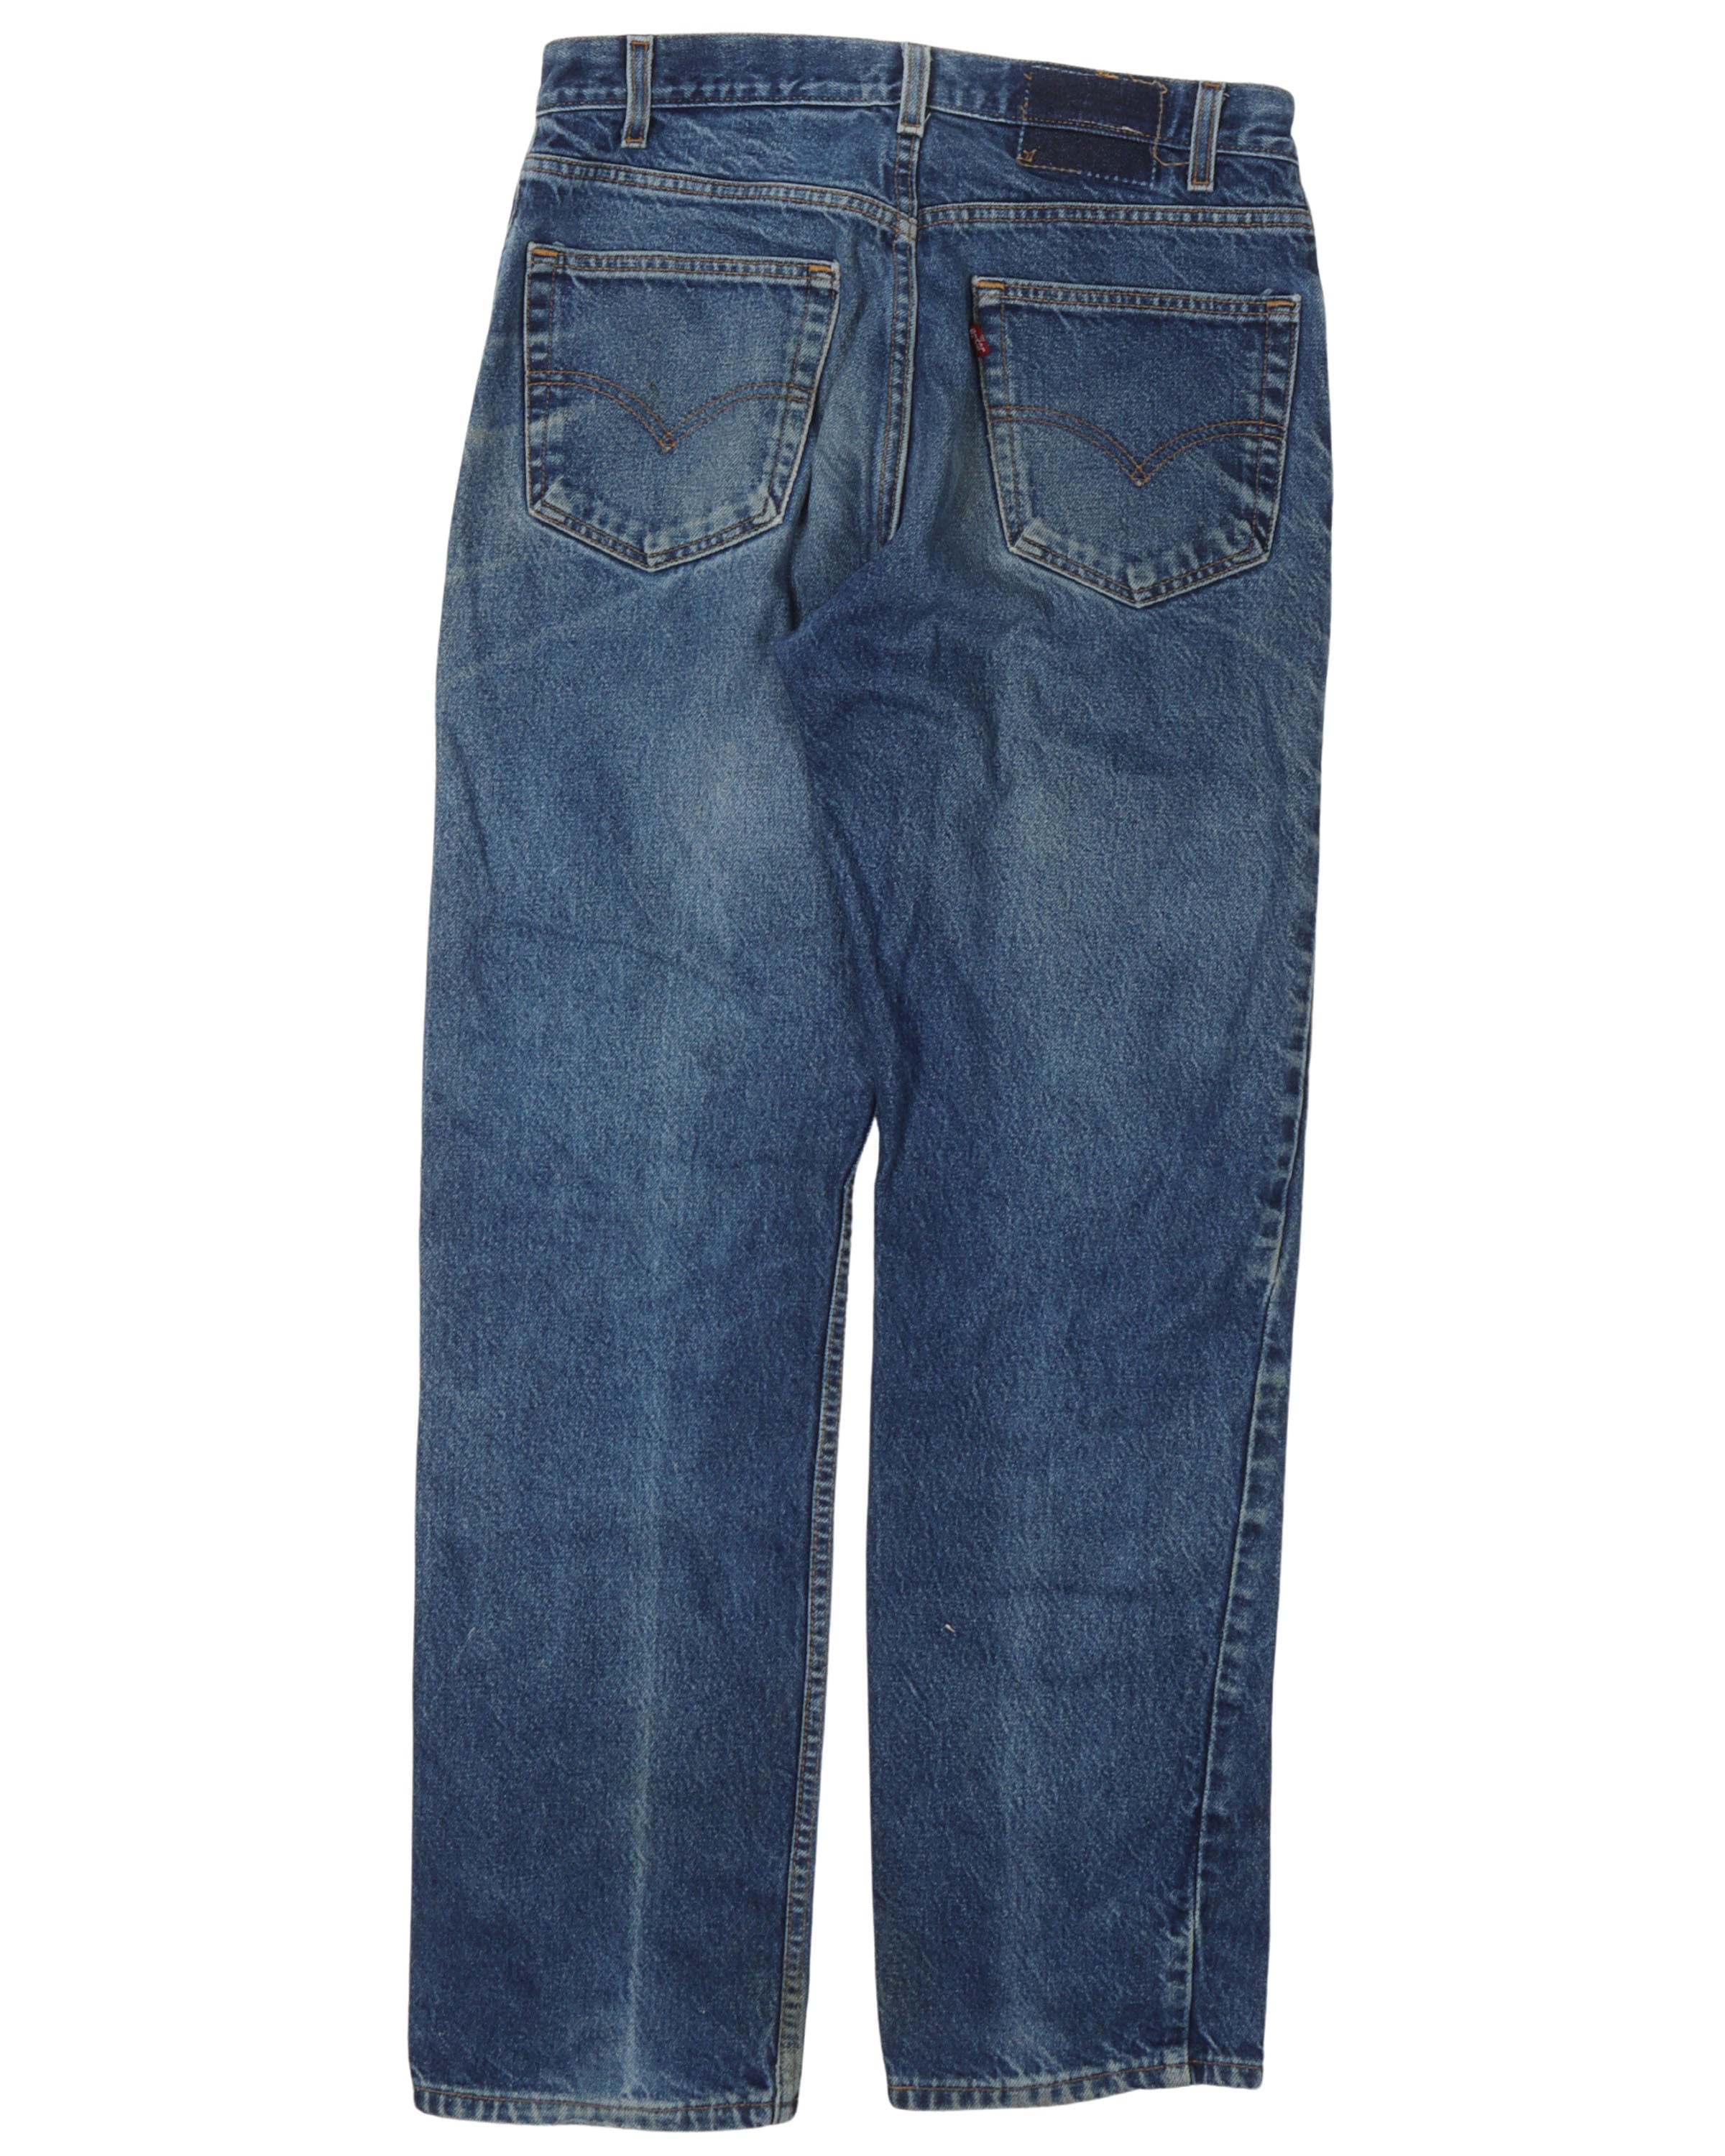 Levi's Blue Fade Jeans